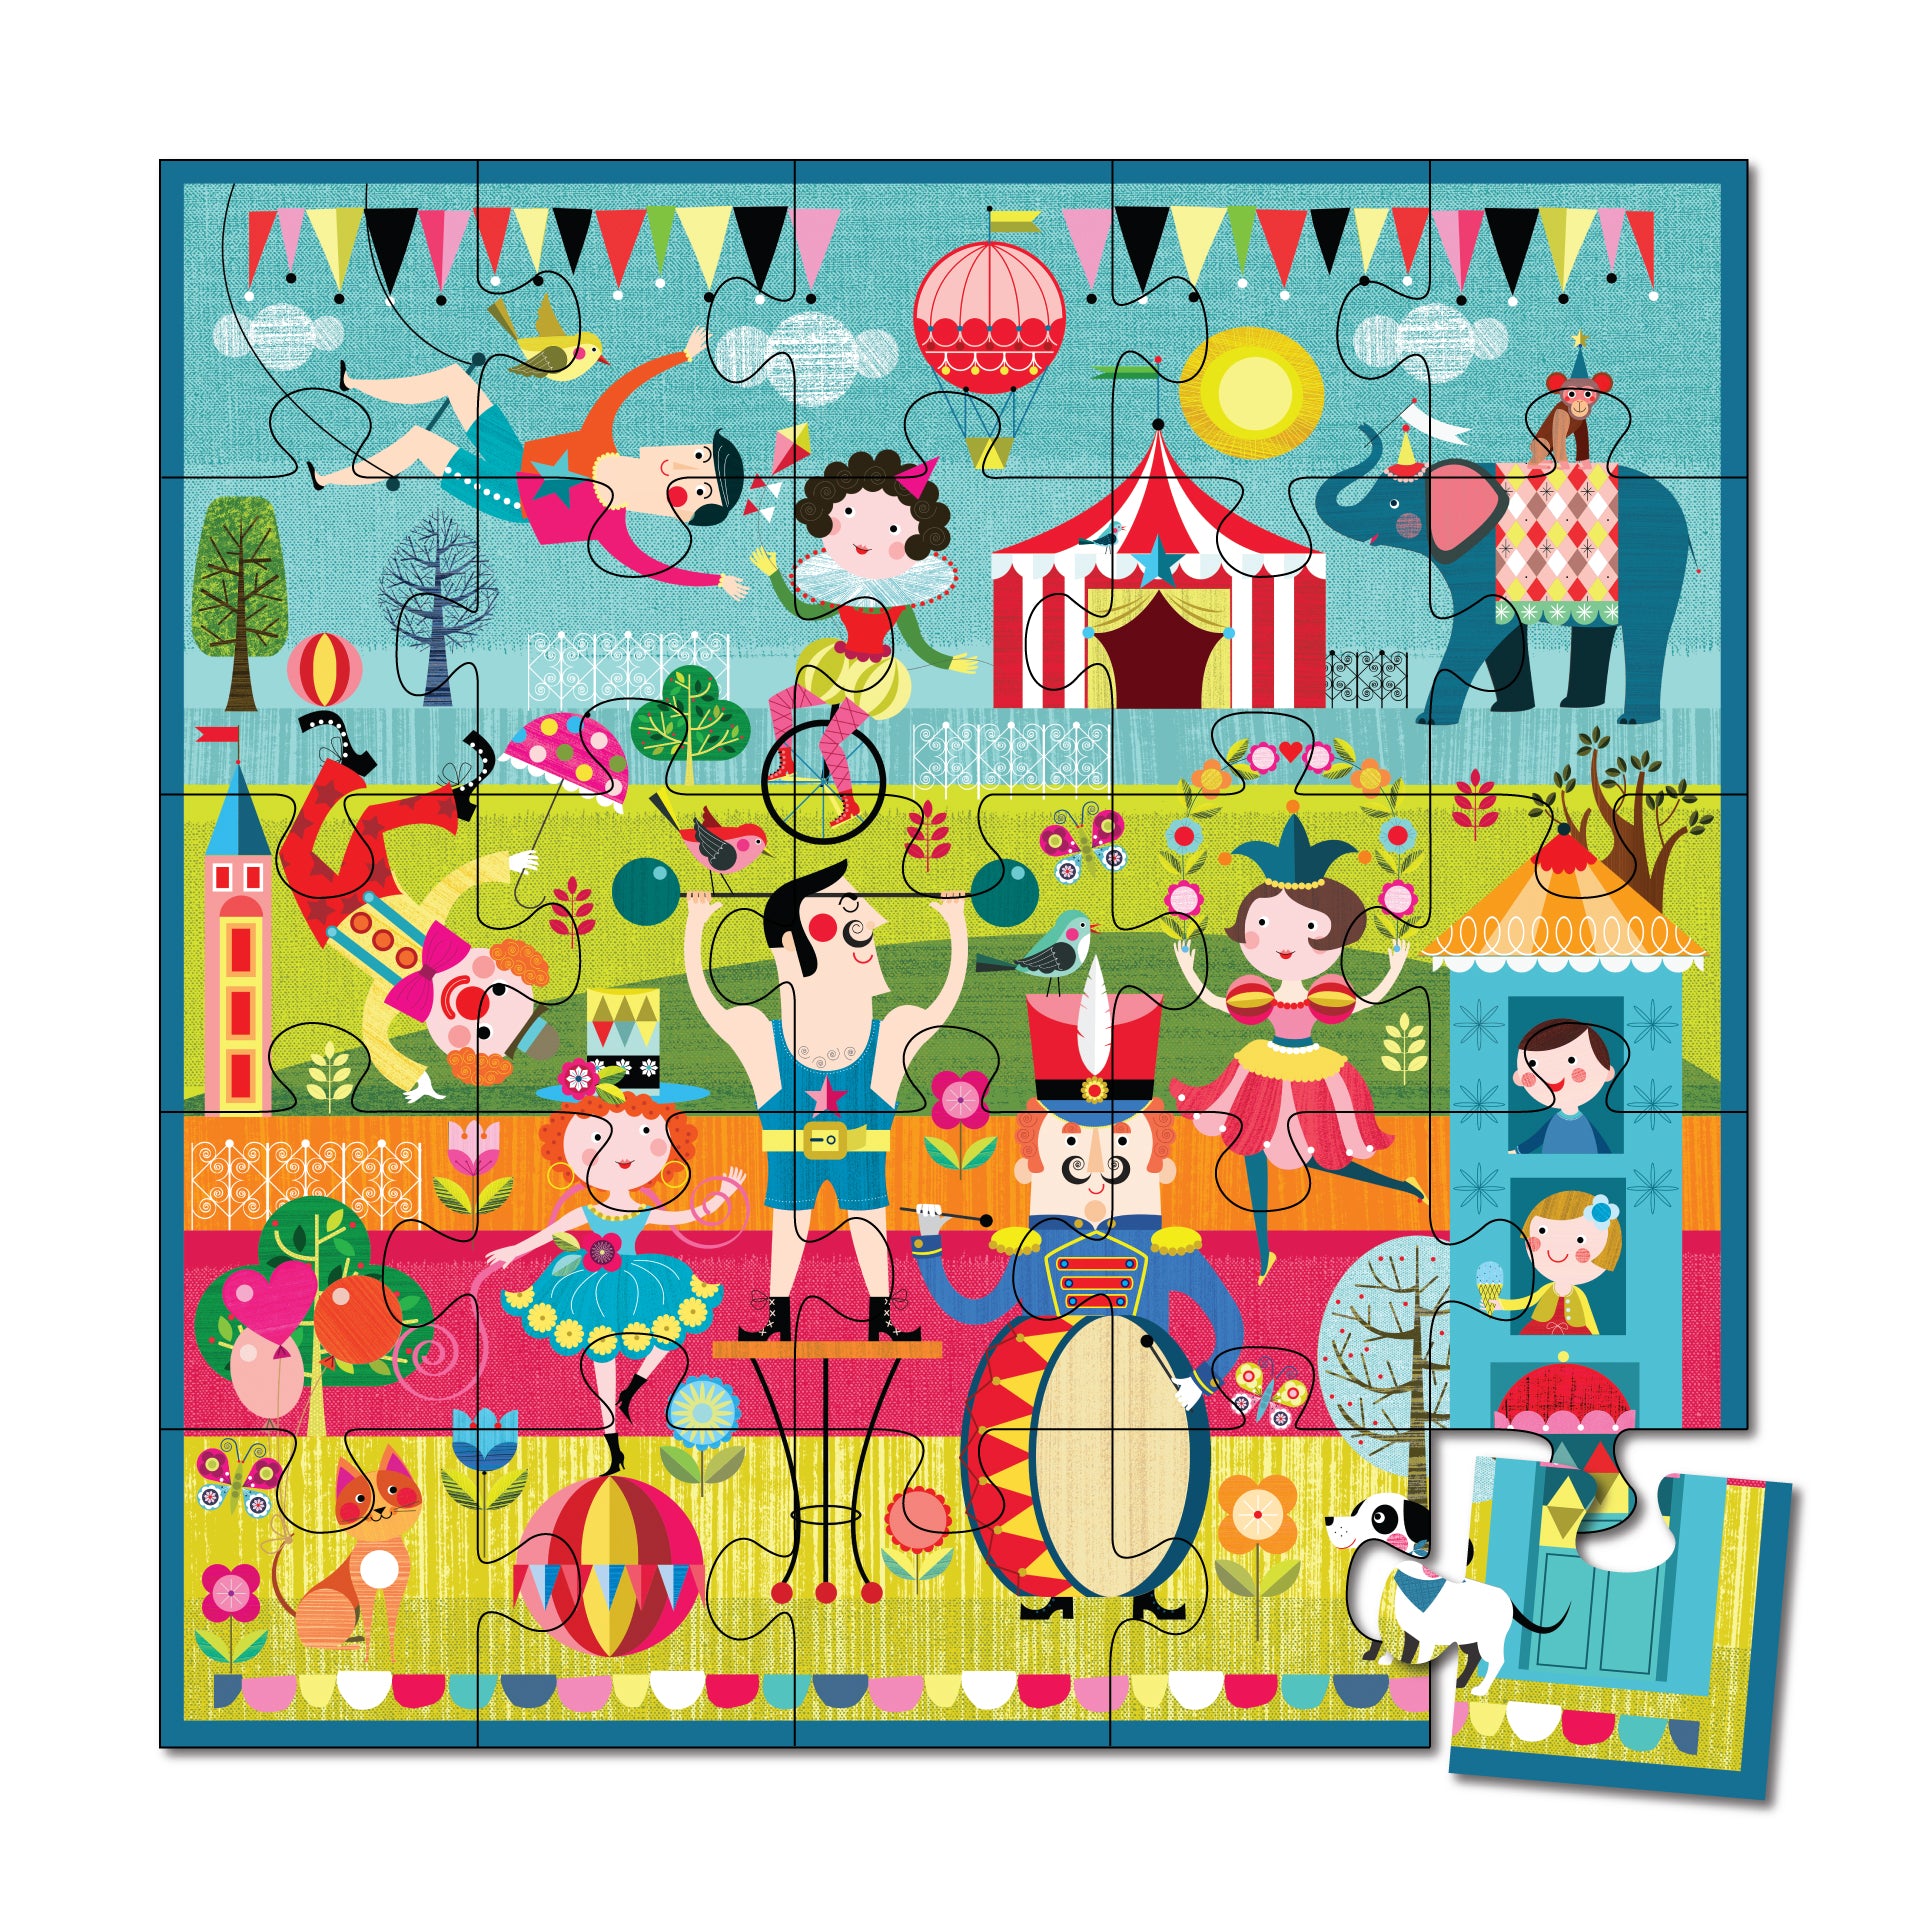 Animal Jamboree + Circus Carnival - 37 Piece Puzzles